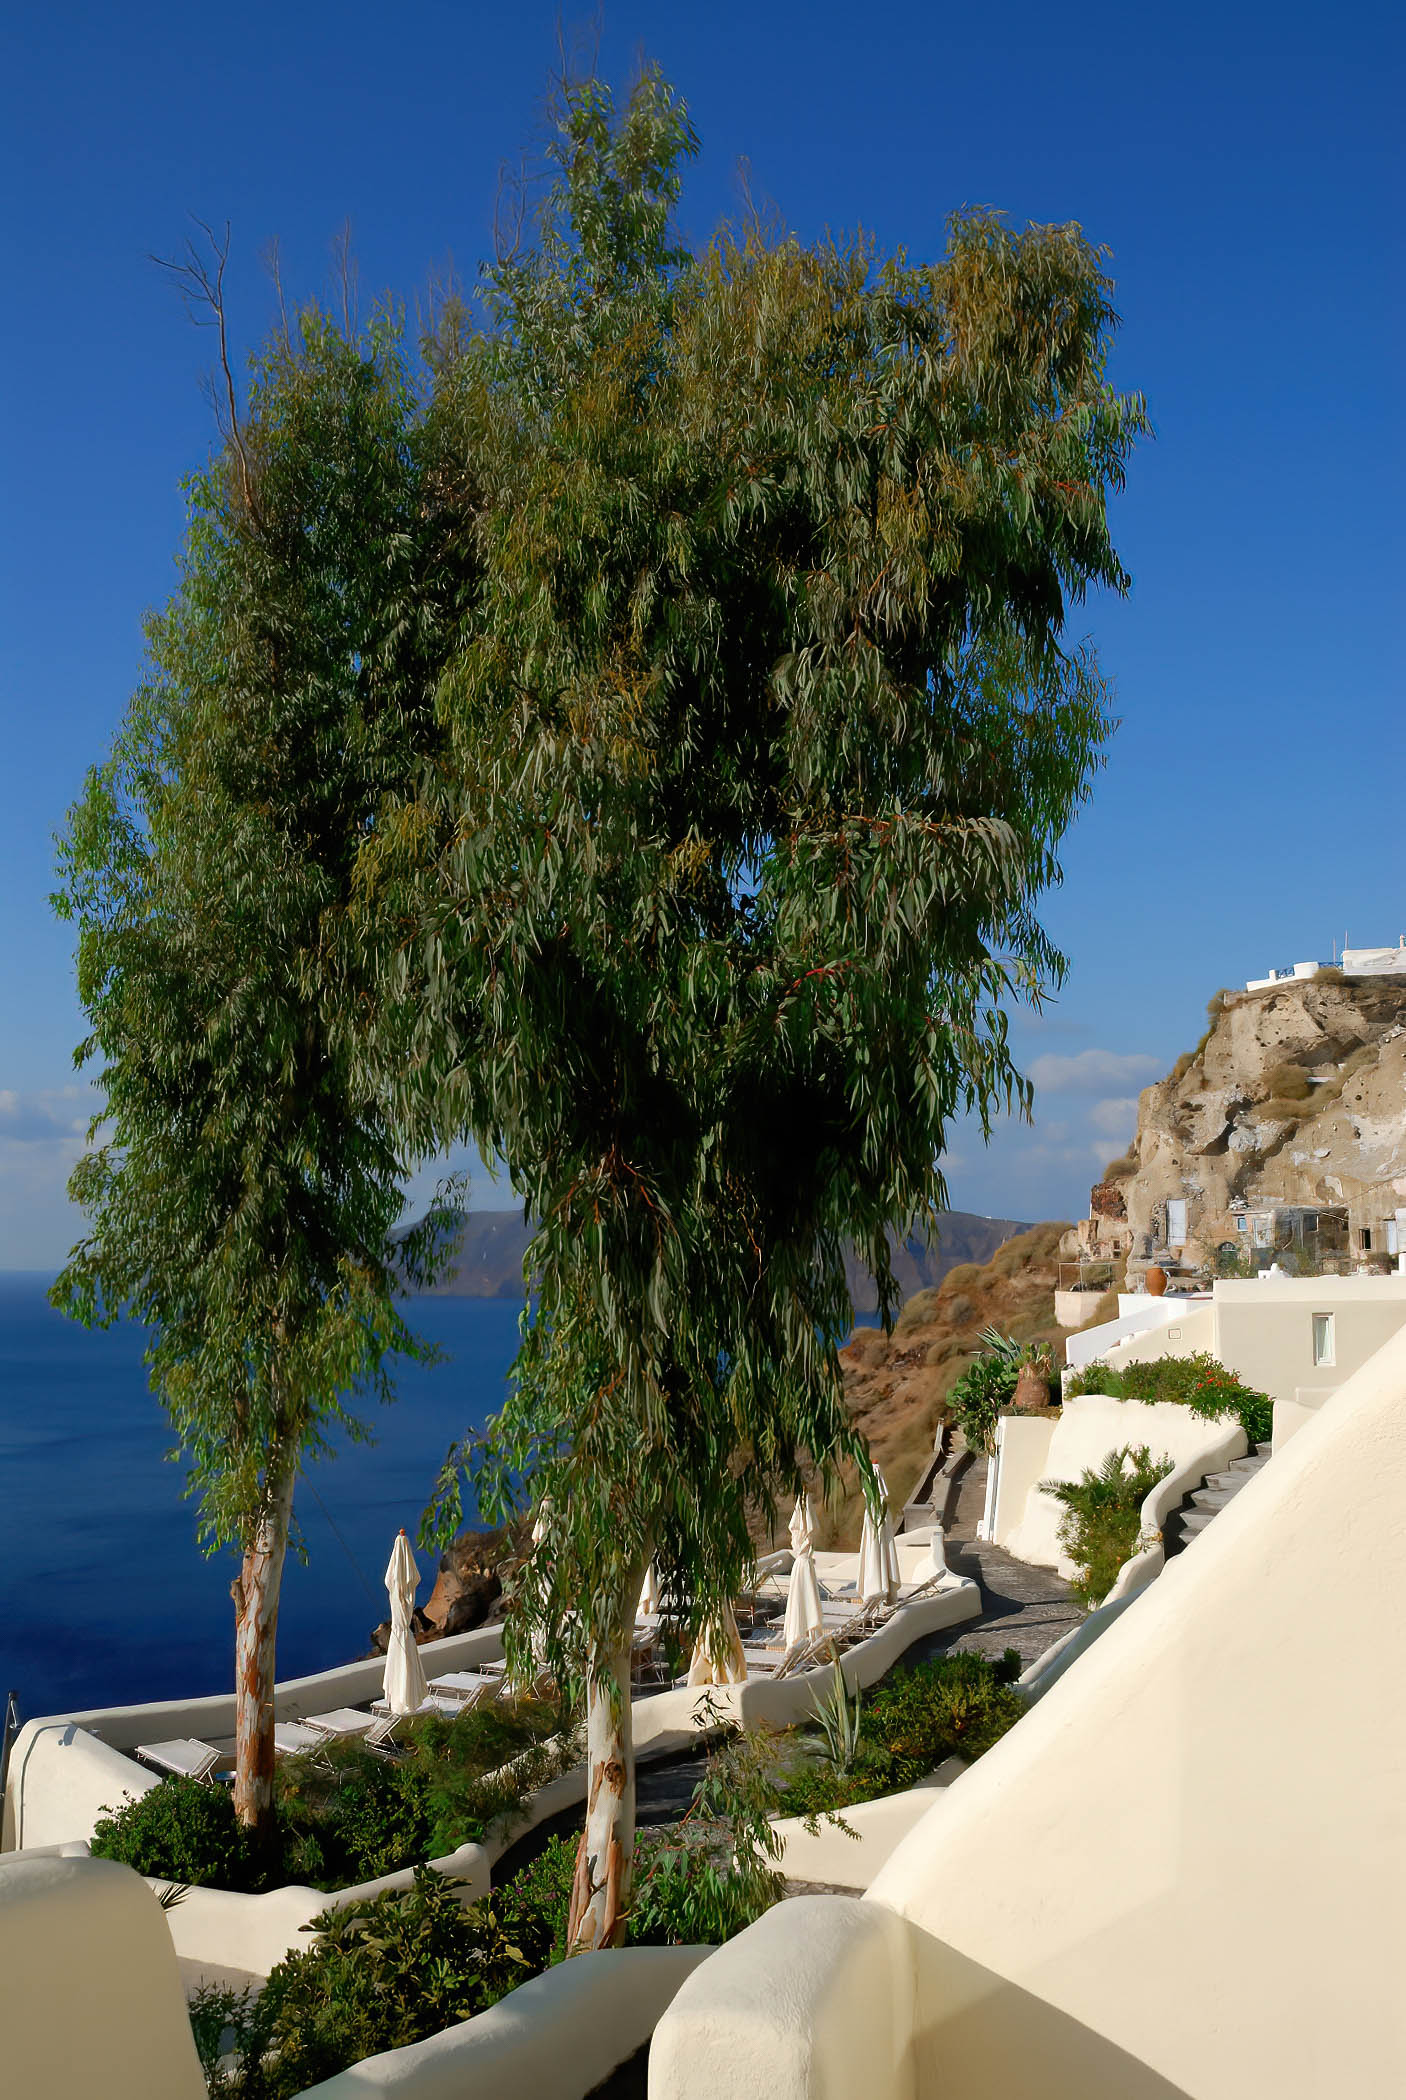 Mystique Hotel Santorini – Oia, Santorini Island, Greece – Cycladic Architecture